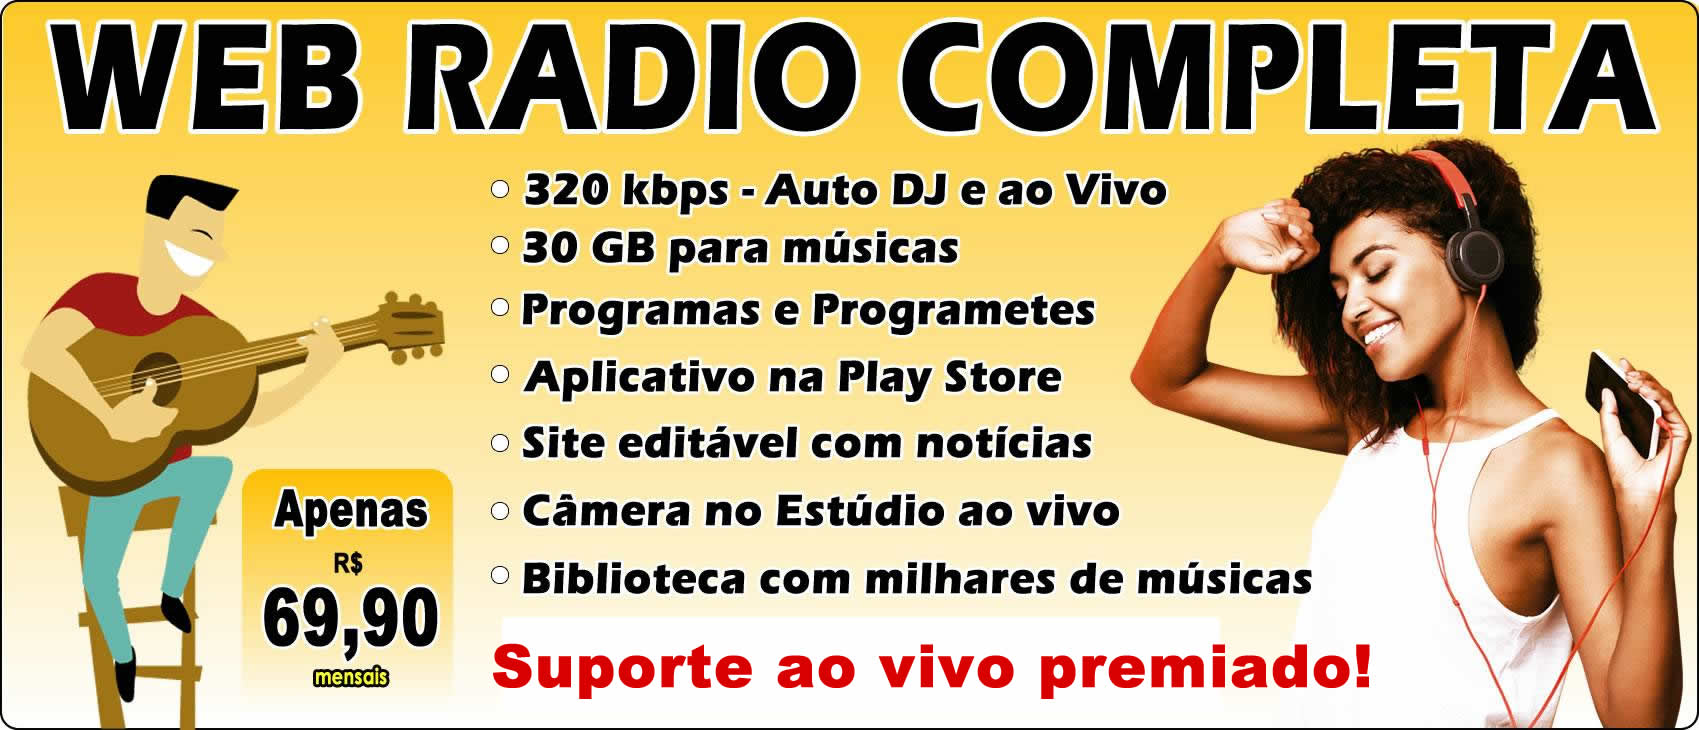 RADIO WEB COMPLETA